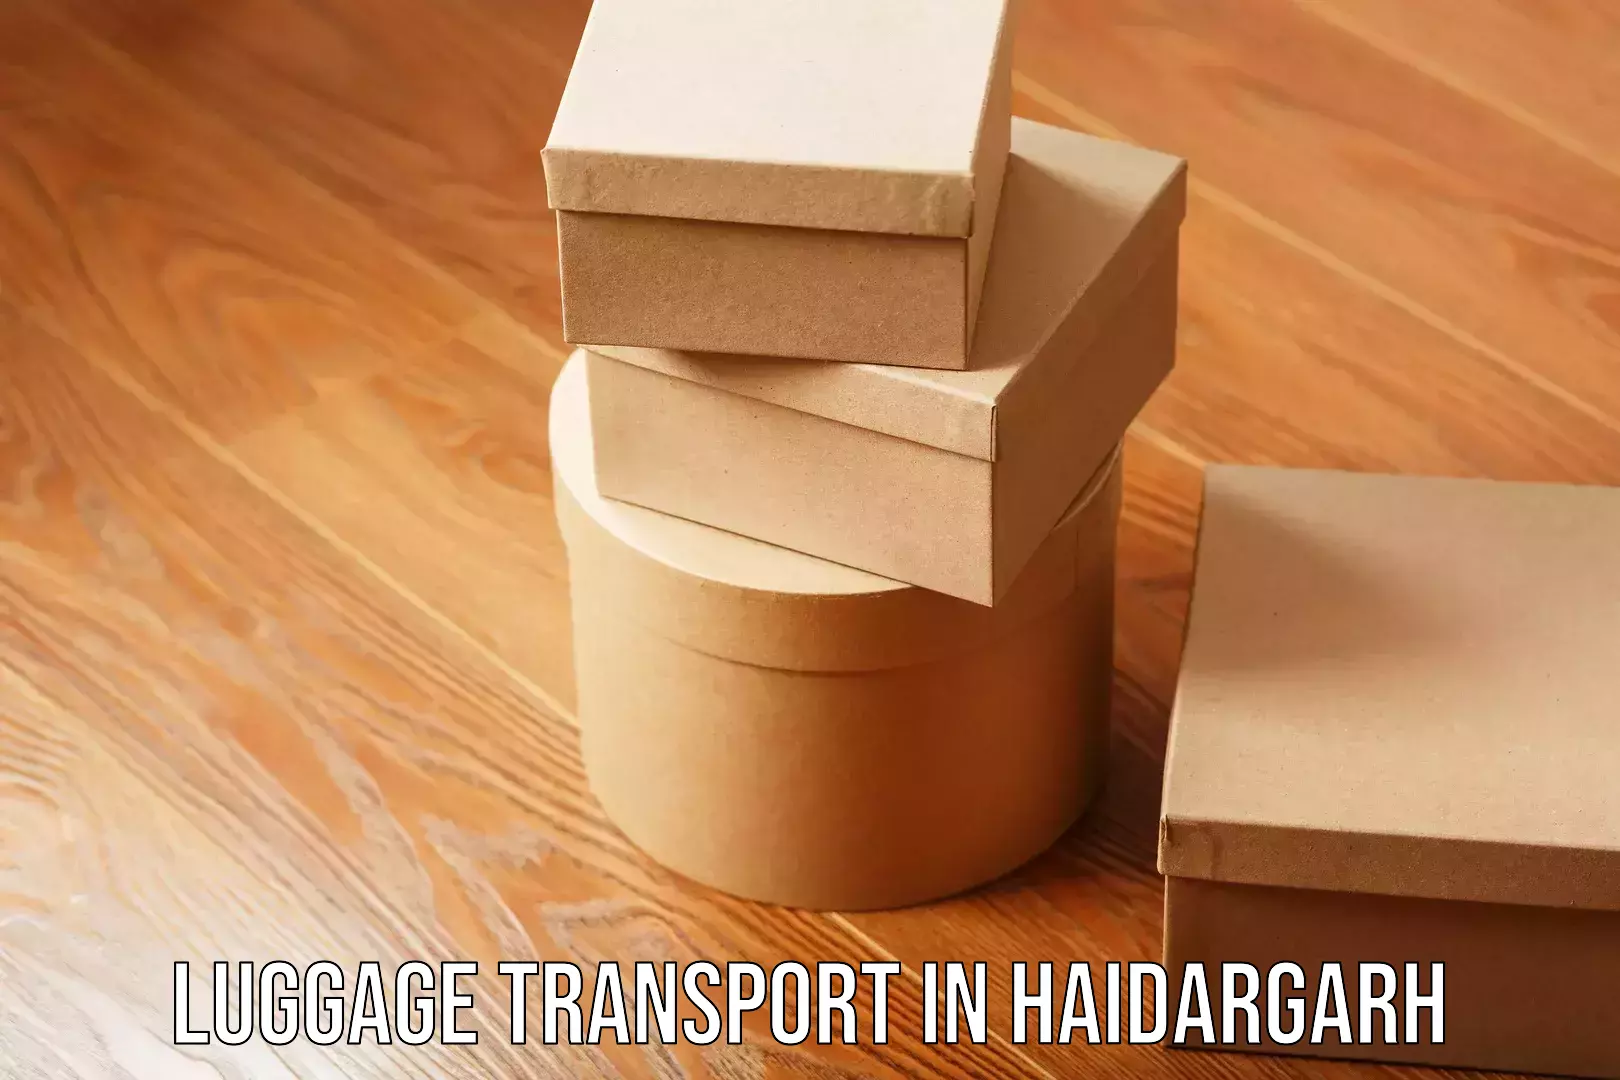 Luggage shipment tracking in Haidargarh